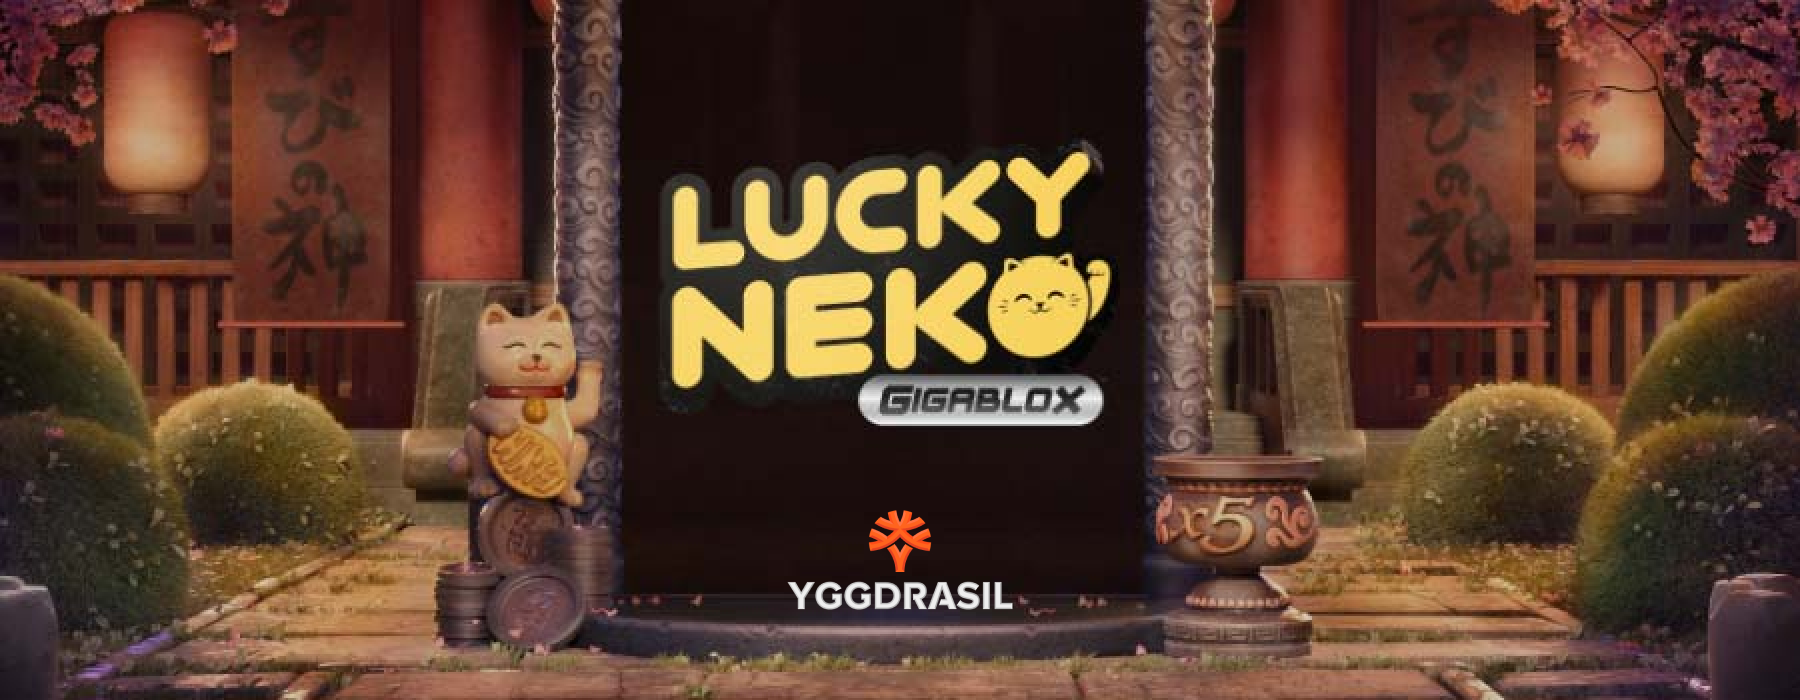 Lucky Neko Gigablox par Yggdrasil